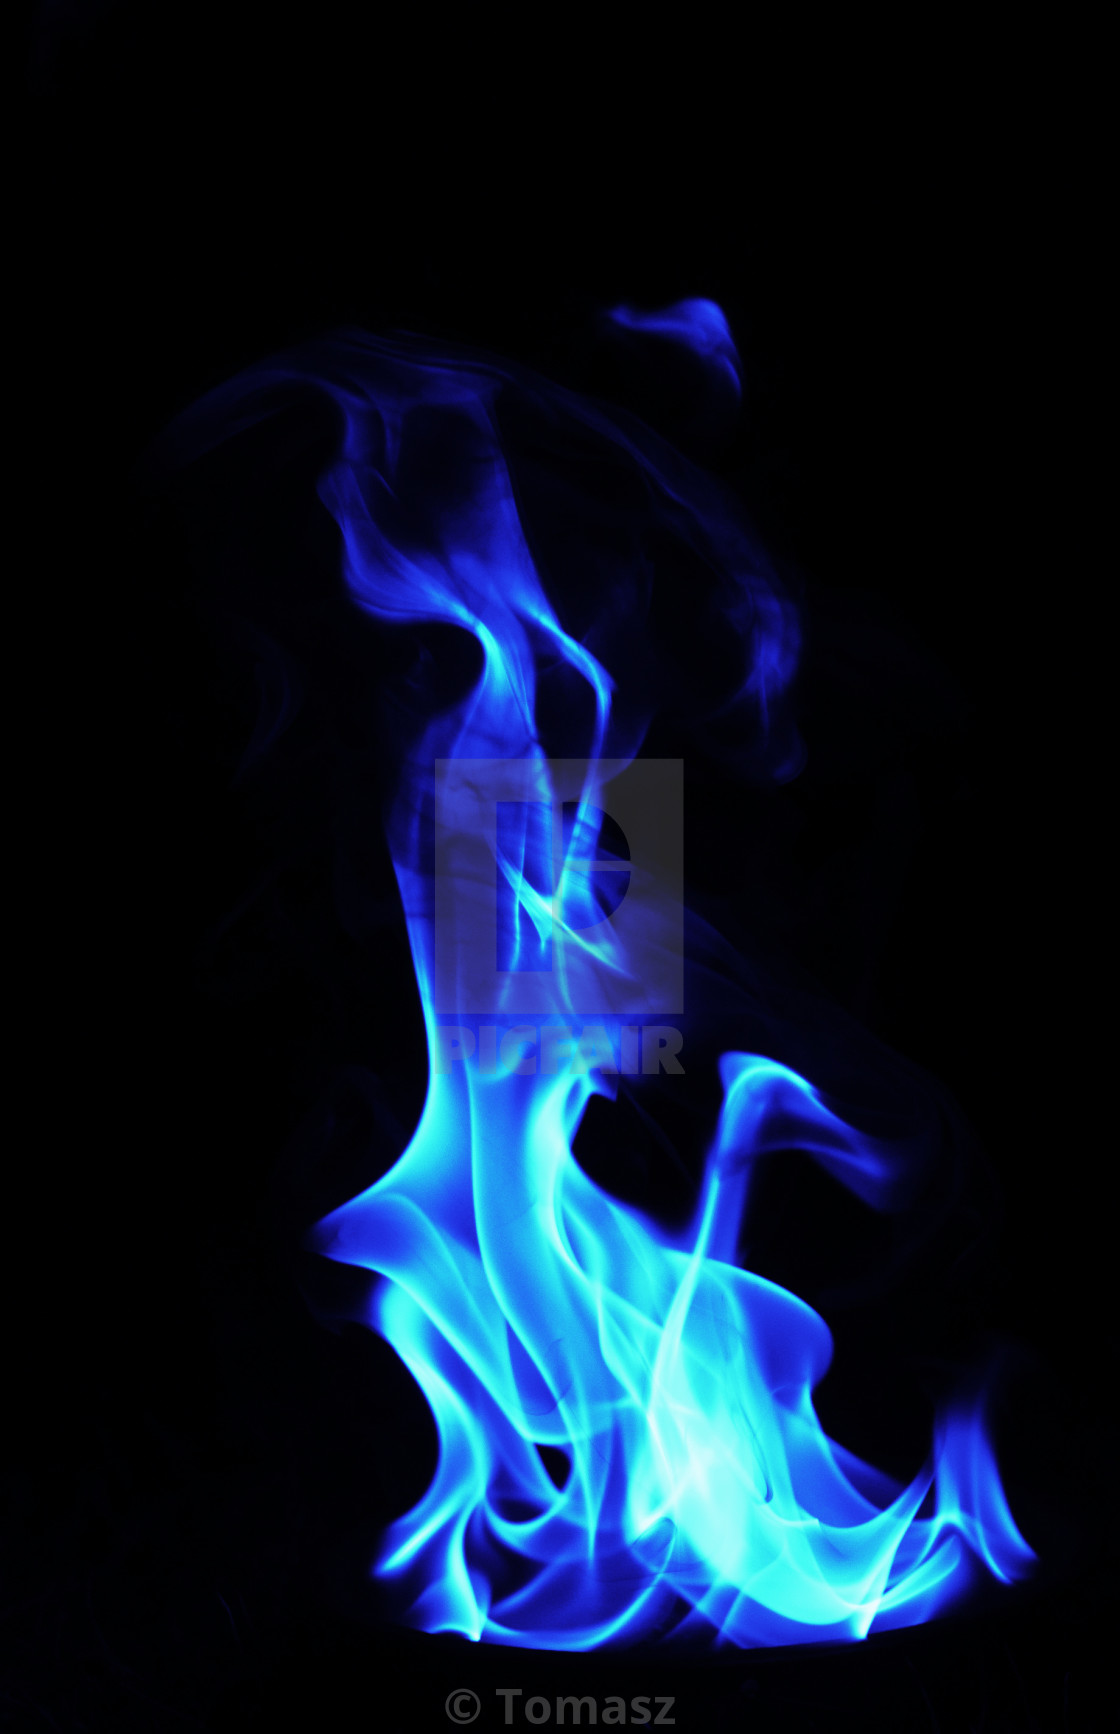 Blue Fire Black Background